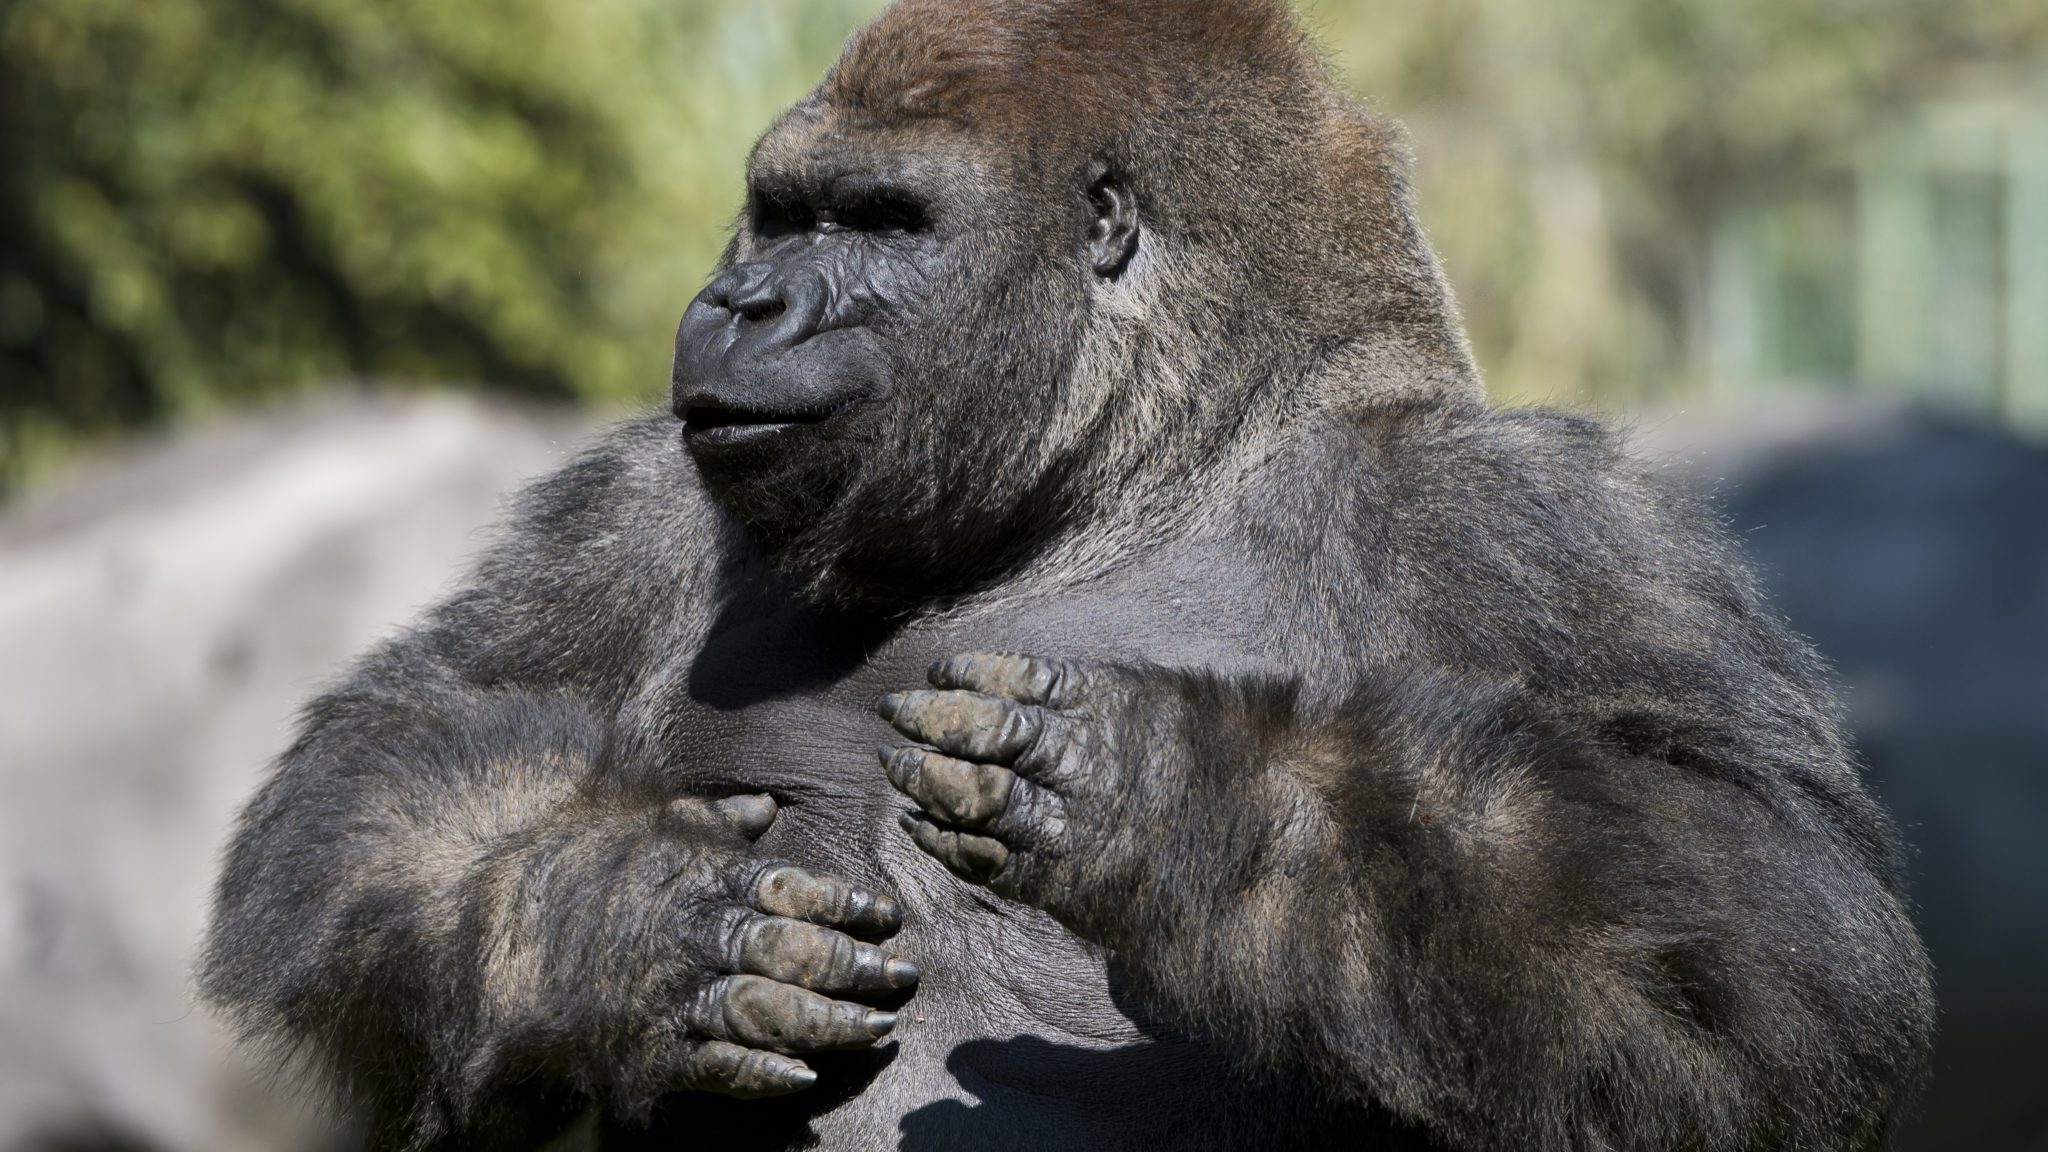 Gorilla, Mexico. Credit: OMAR TORRES/AFP/GETTY IMAGES